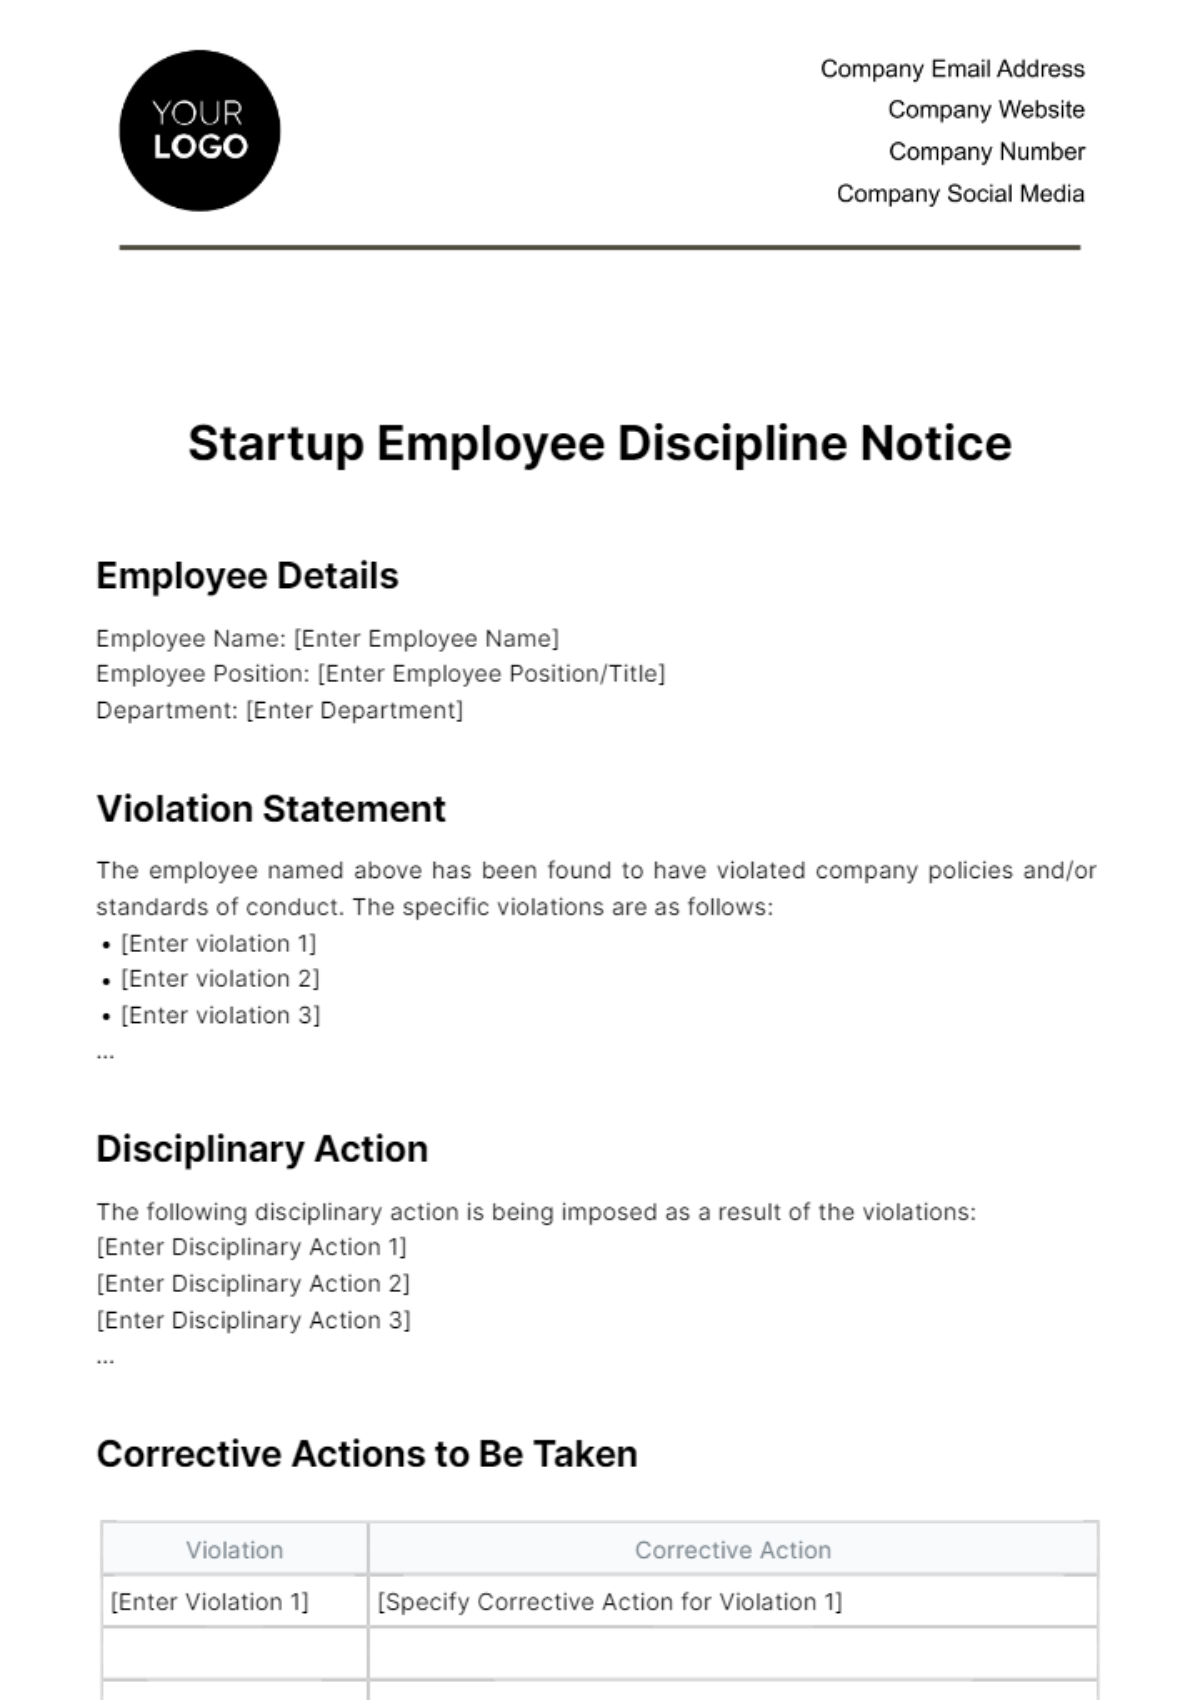 Startup Employee Discipline Notice Template